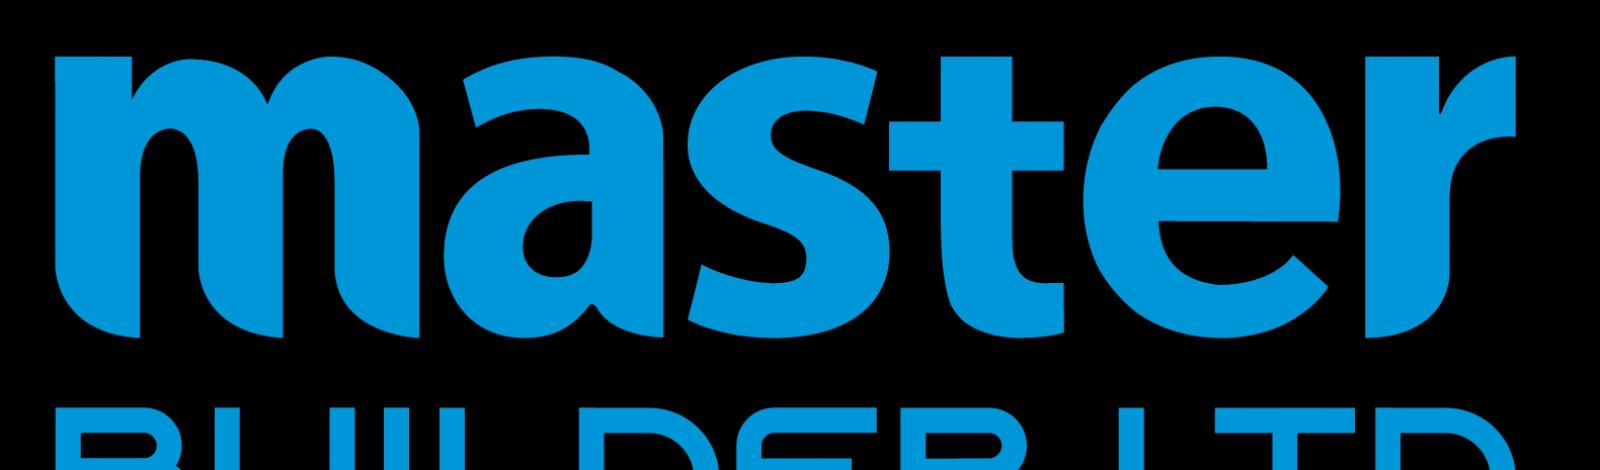 Master Builder Ltd. banner